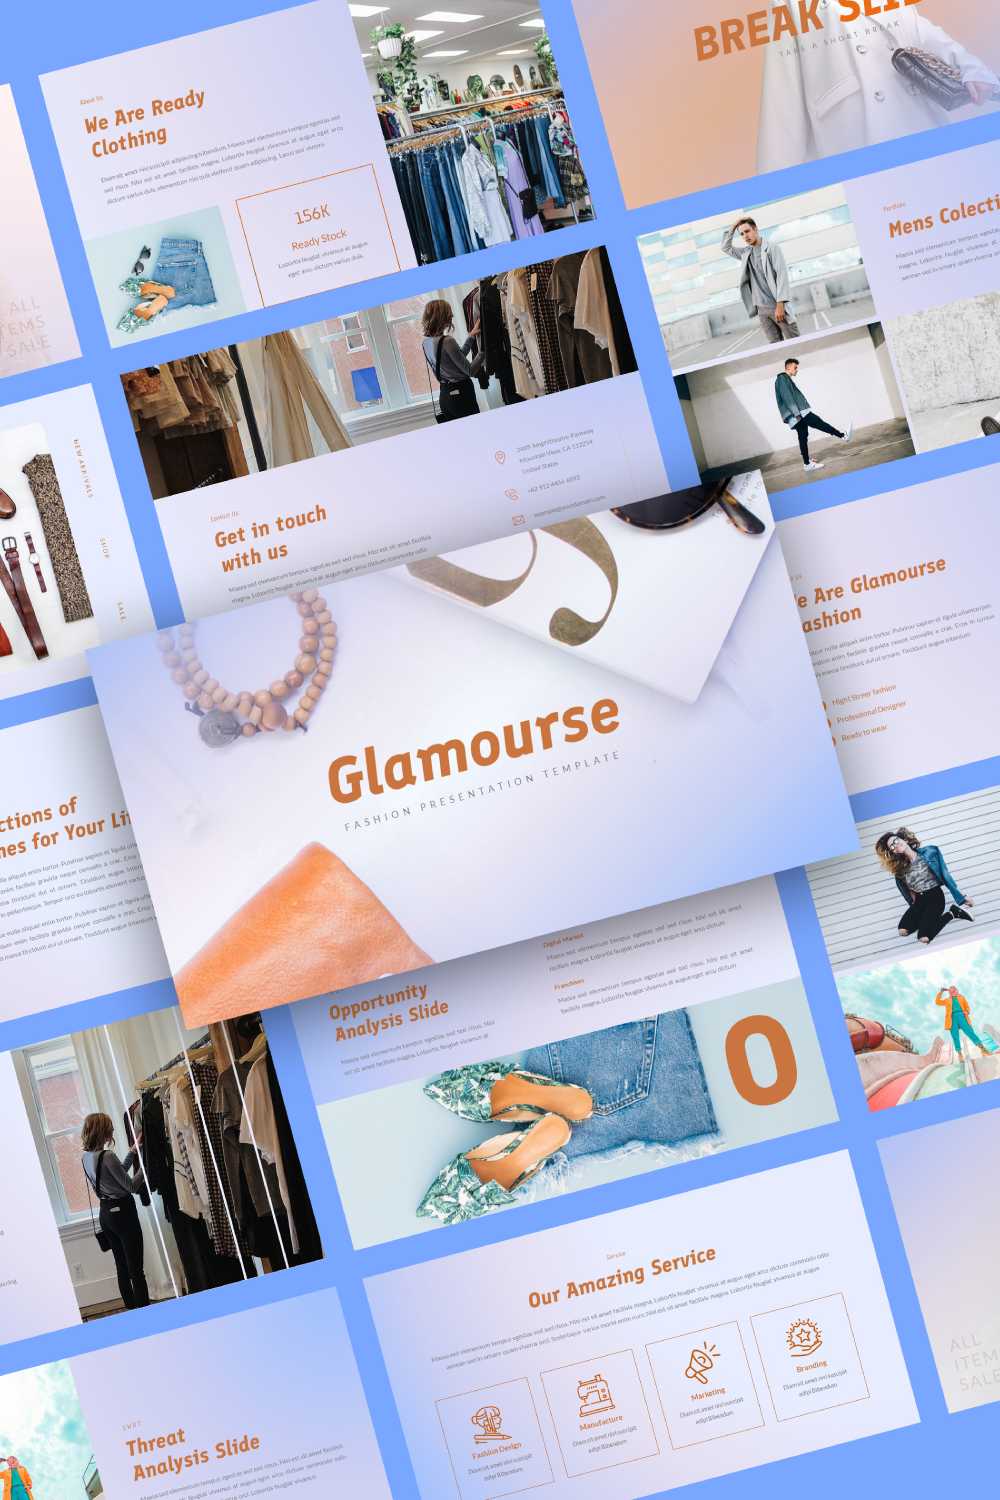 Glamourse - Fashion Google Slides Presentation Template pinterest preview image.